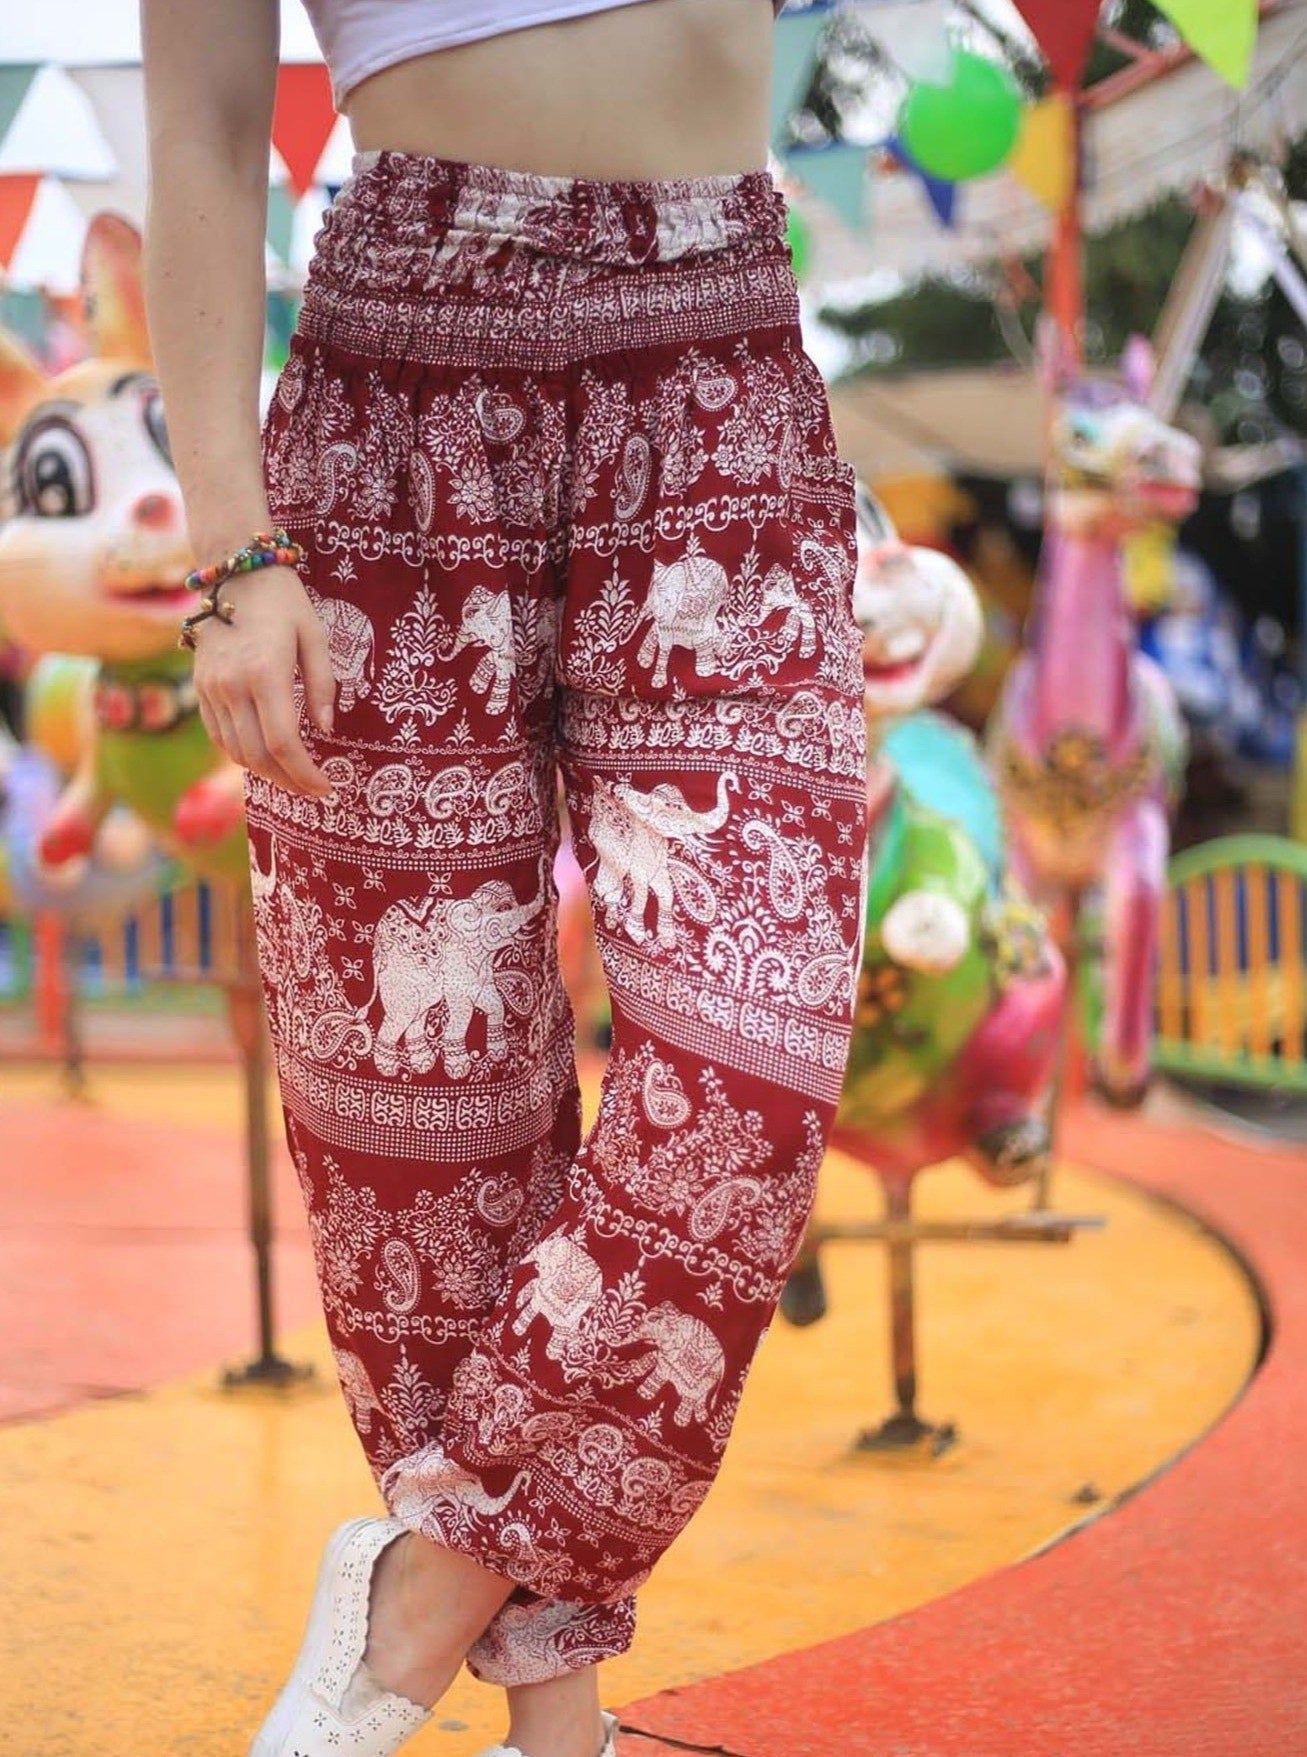 Elephant Pants Elephant Paisley Pattern - Thai Fisherman Pants & Harem Pants  for Men and Women